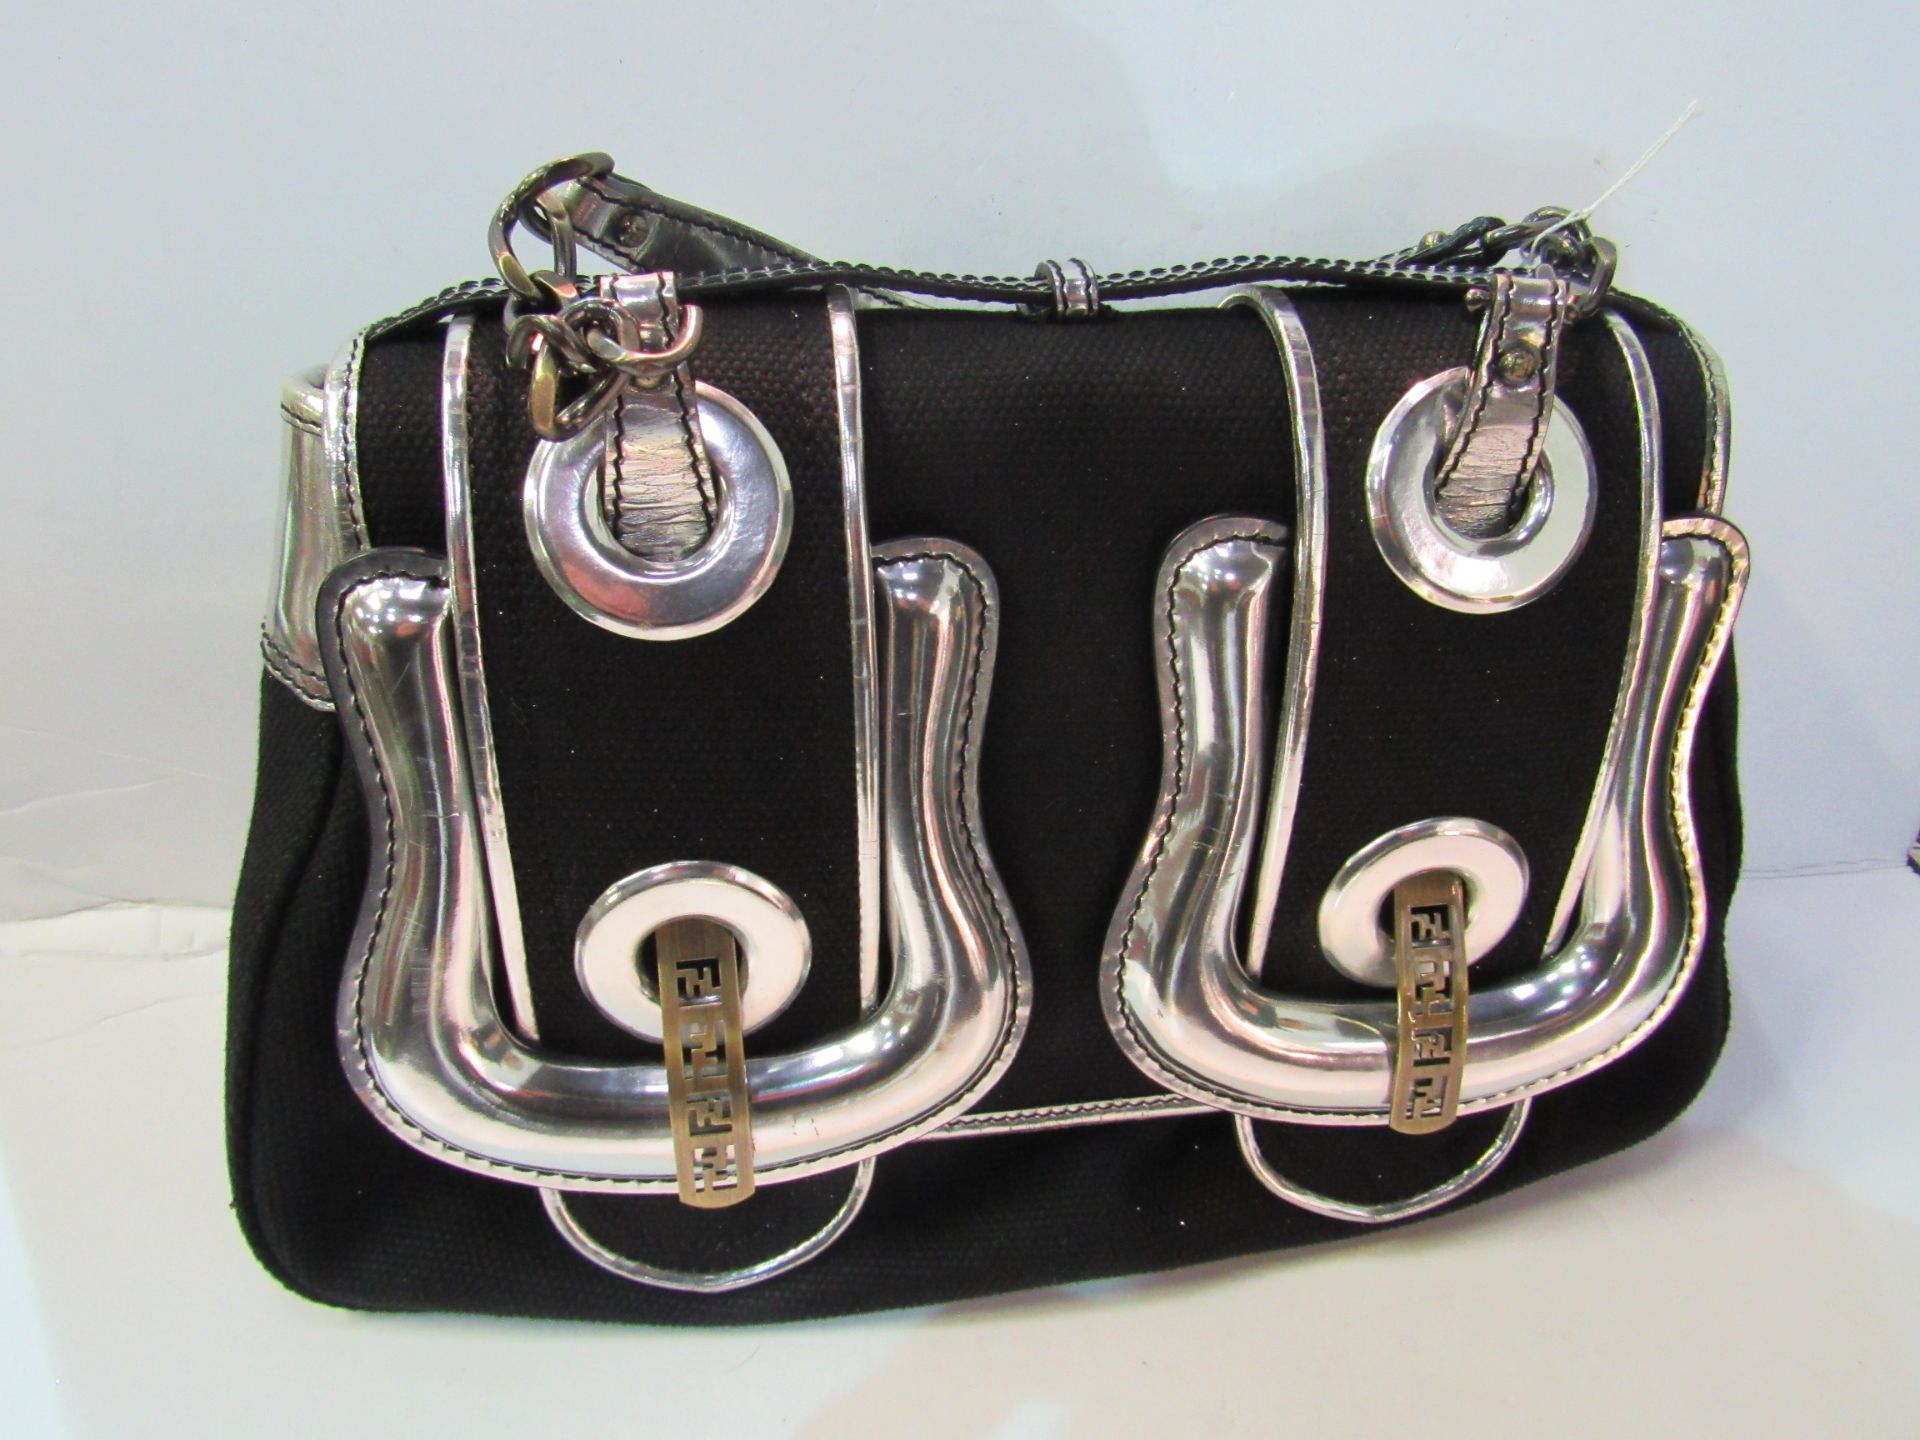 Authentic ""FENDI"" silver trimmed black handbag in dustbag. Estimate £40-60. - Image 2 of 2